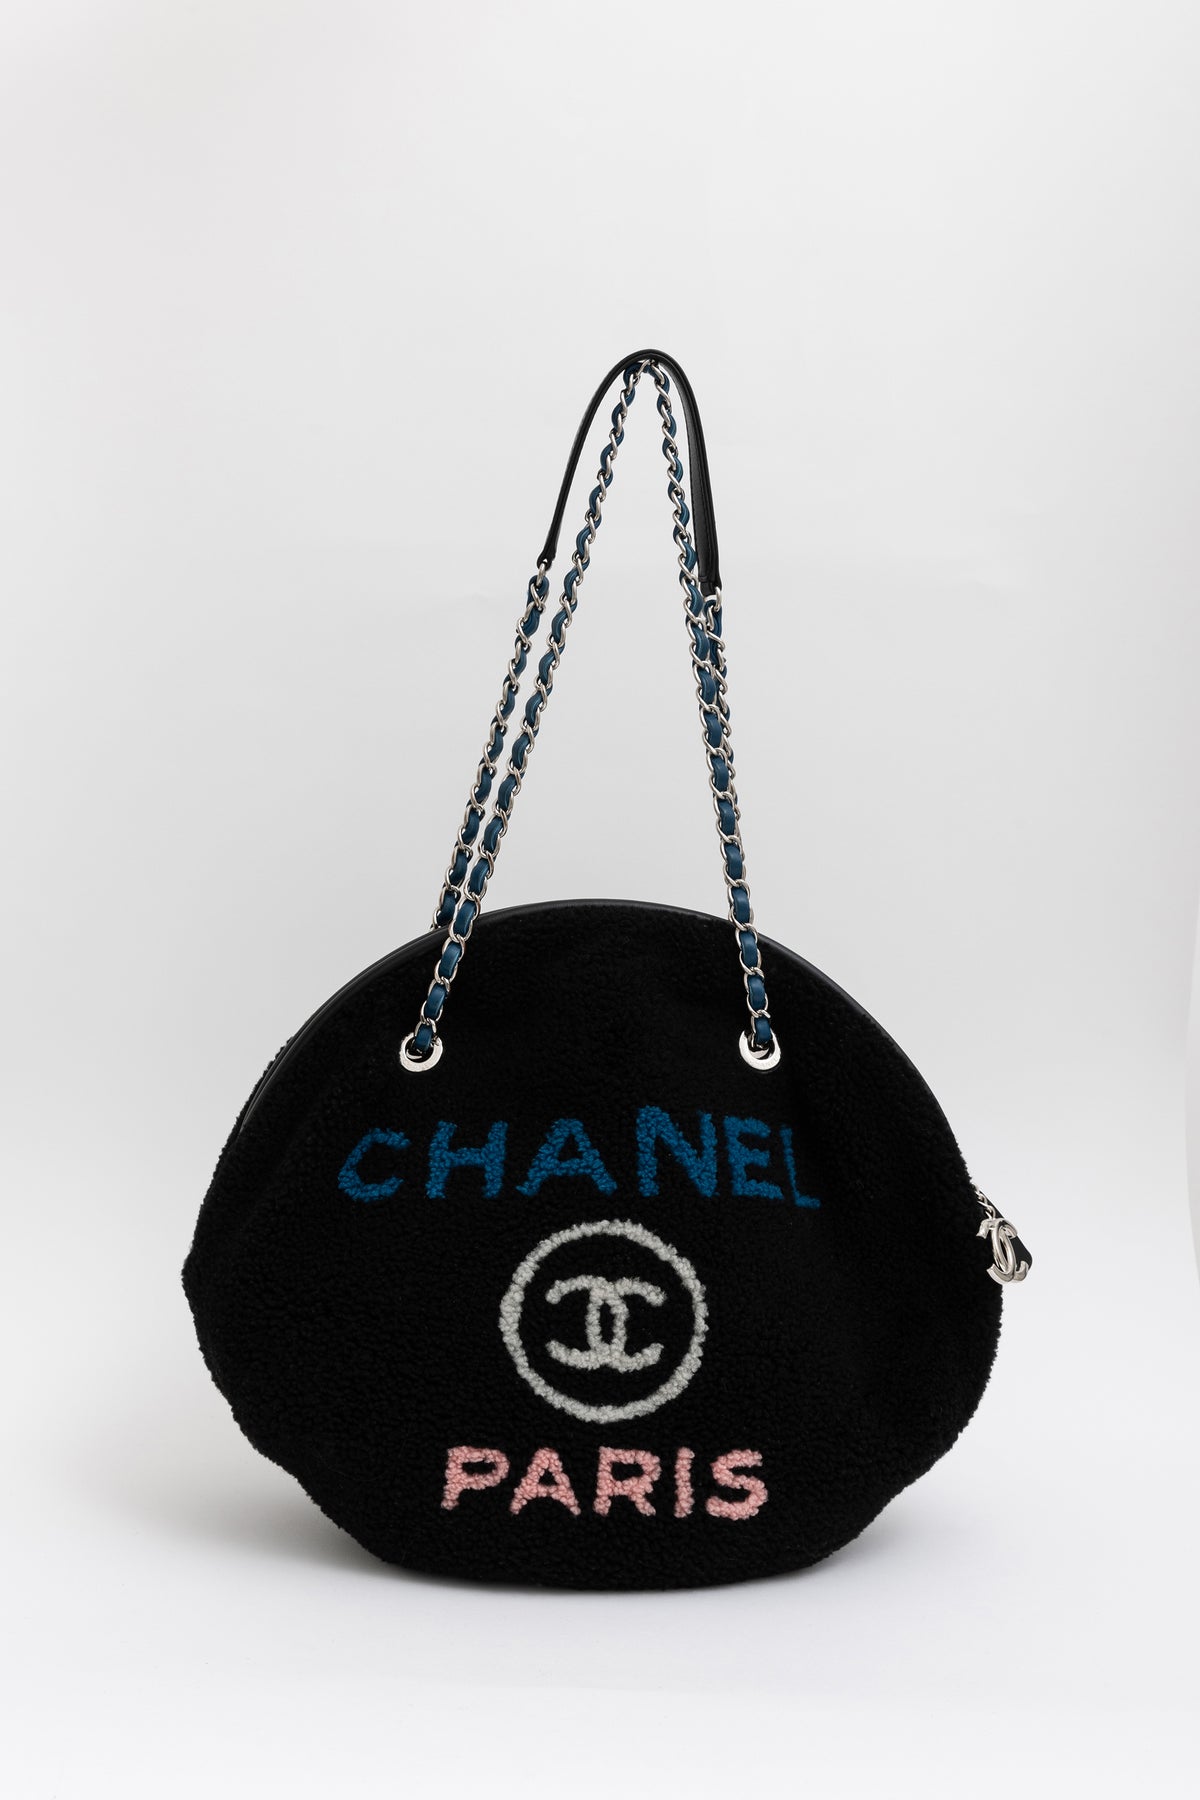 Chanel - The Purse Ladies